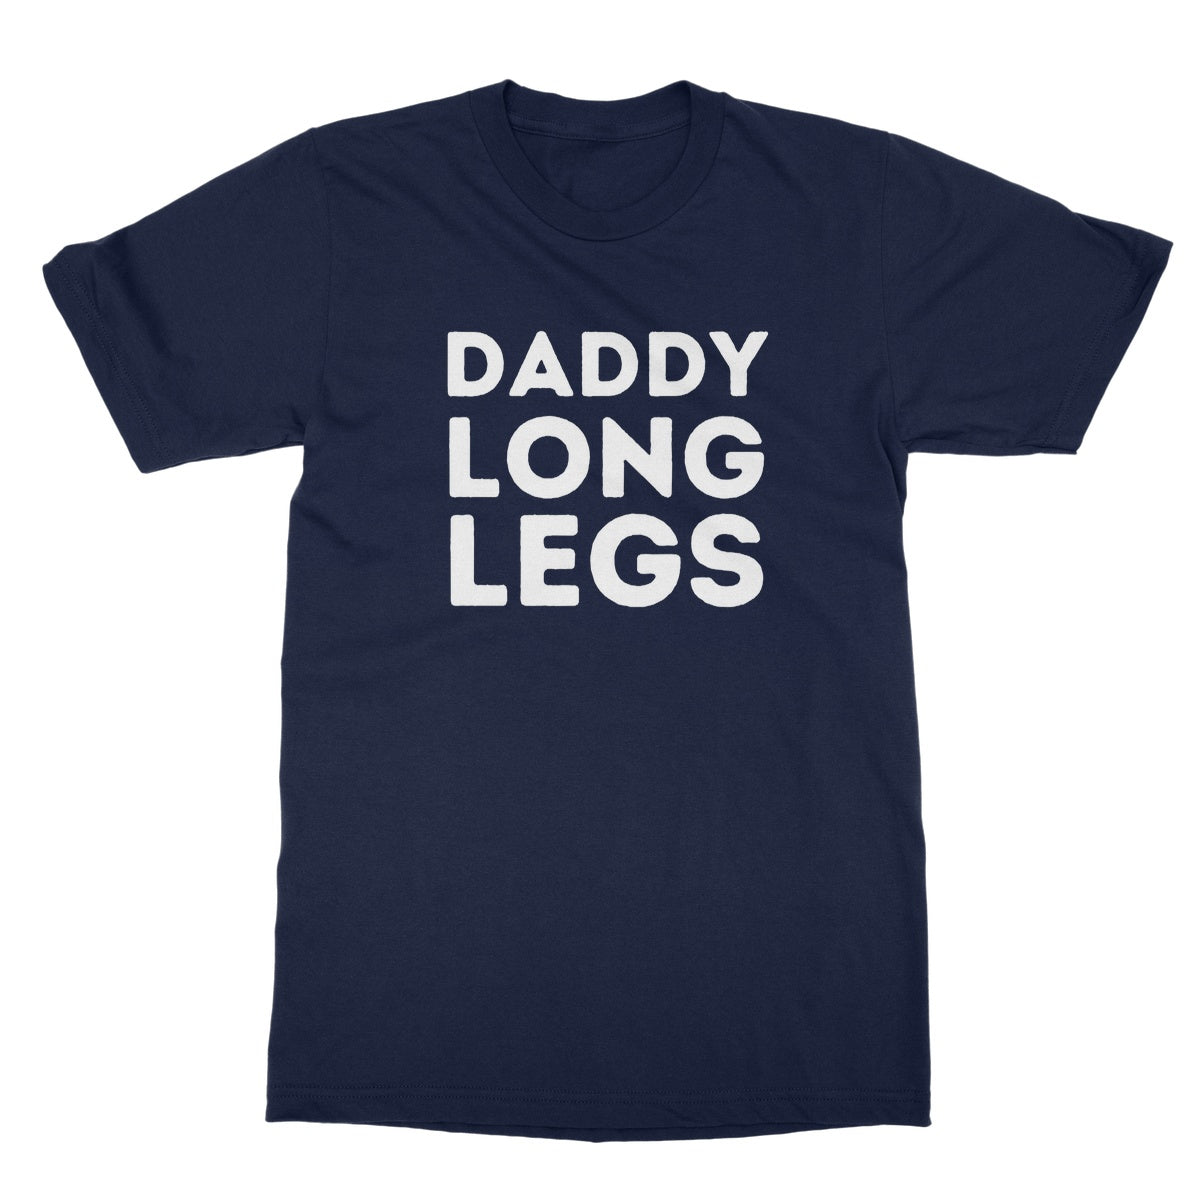 daddy long legs t shirt navy